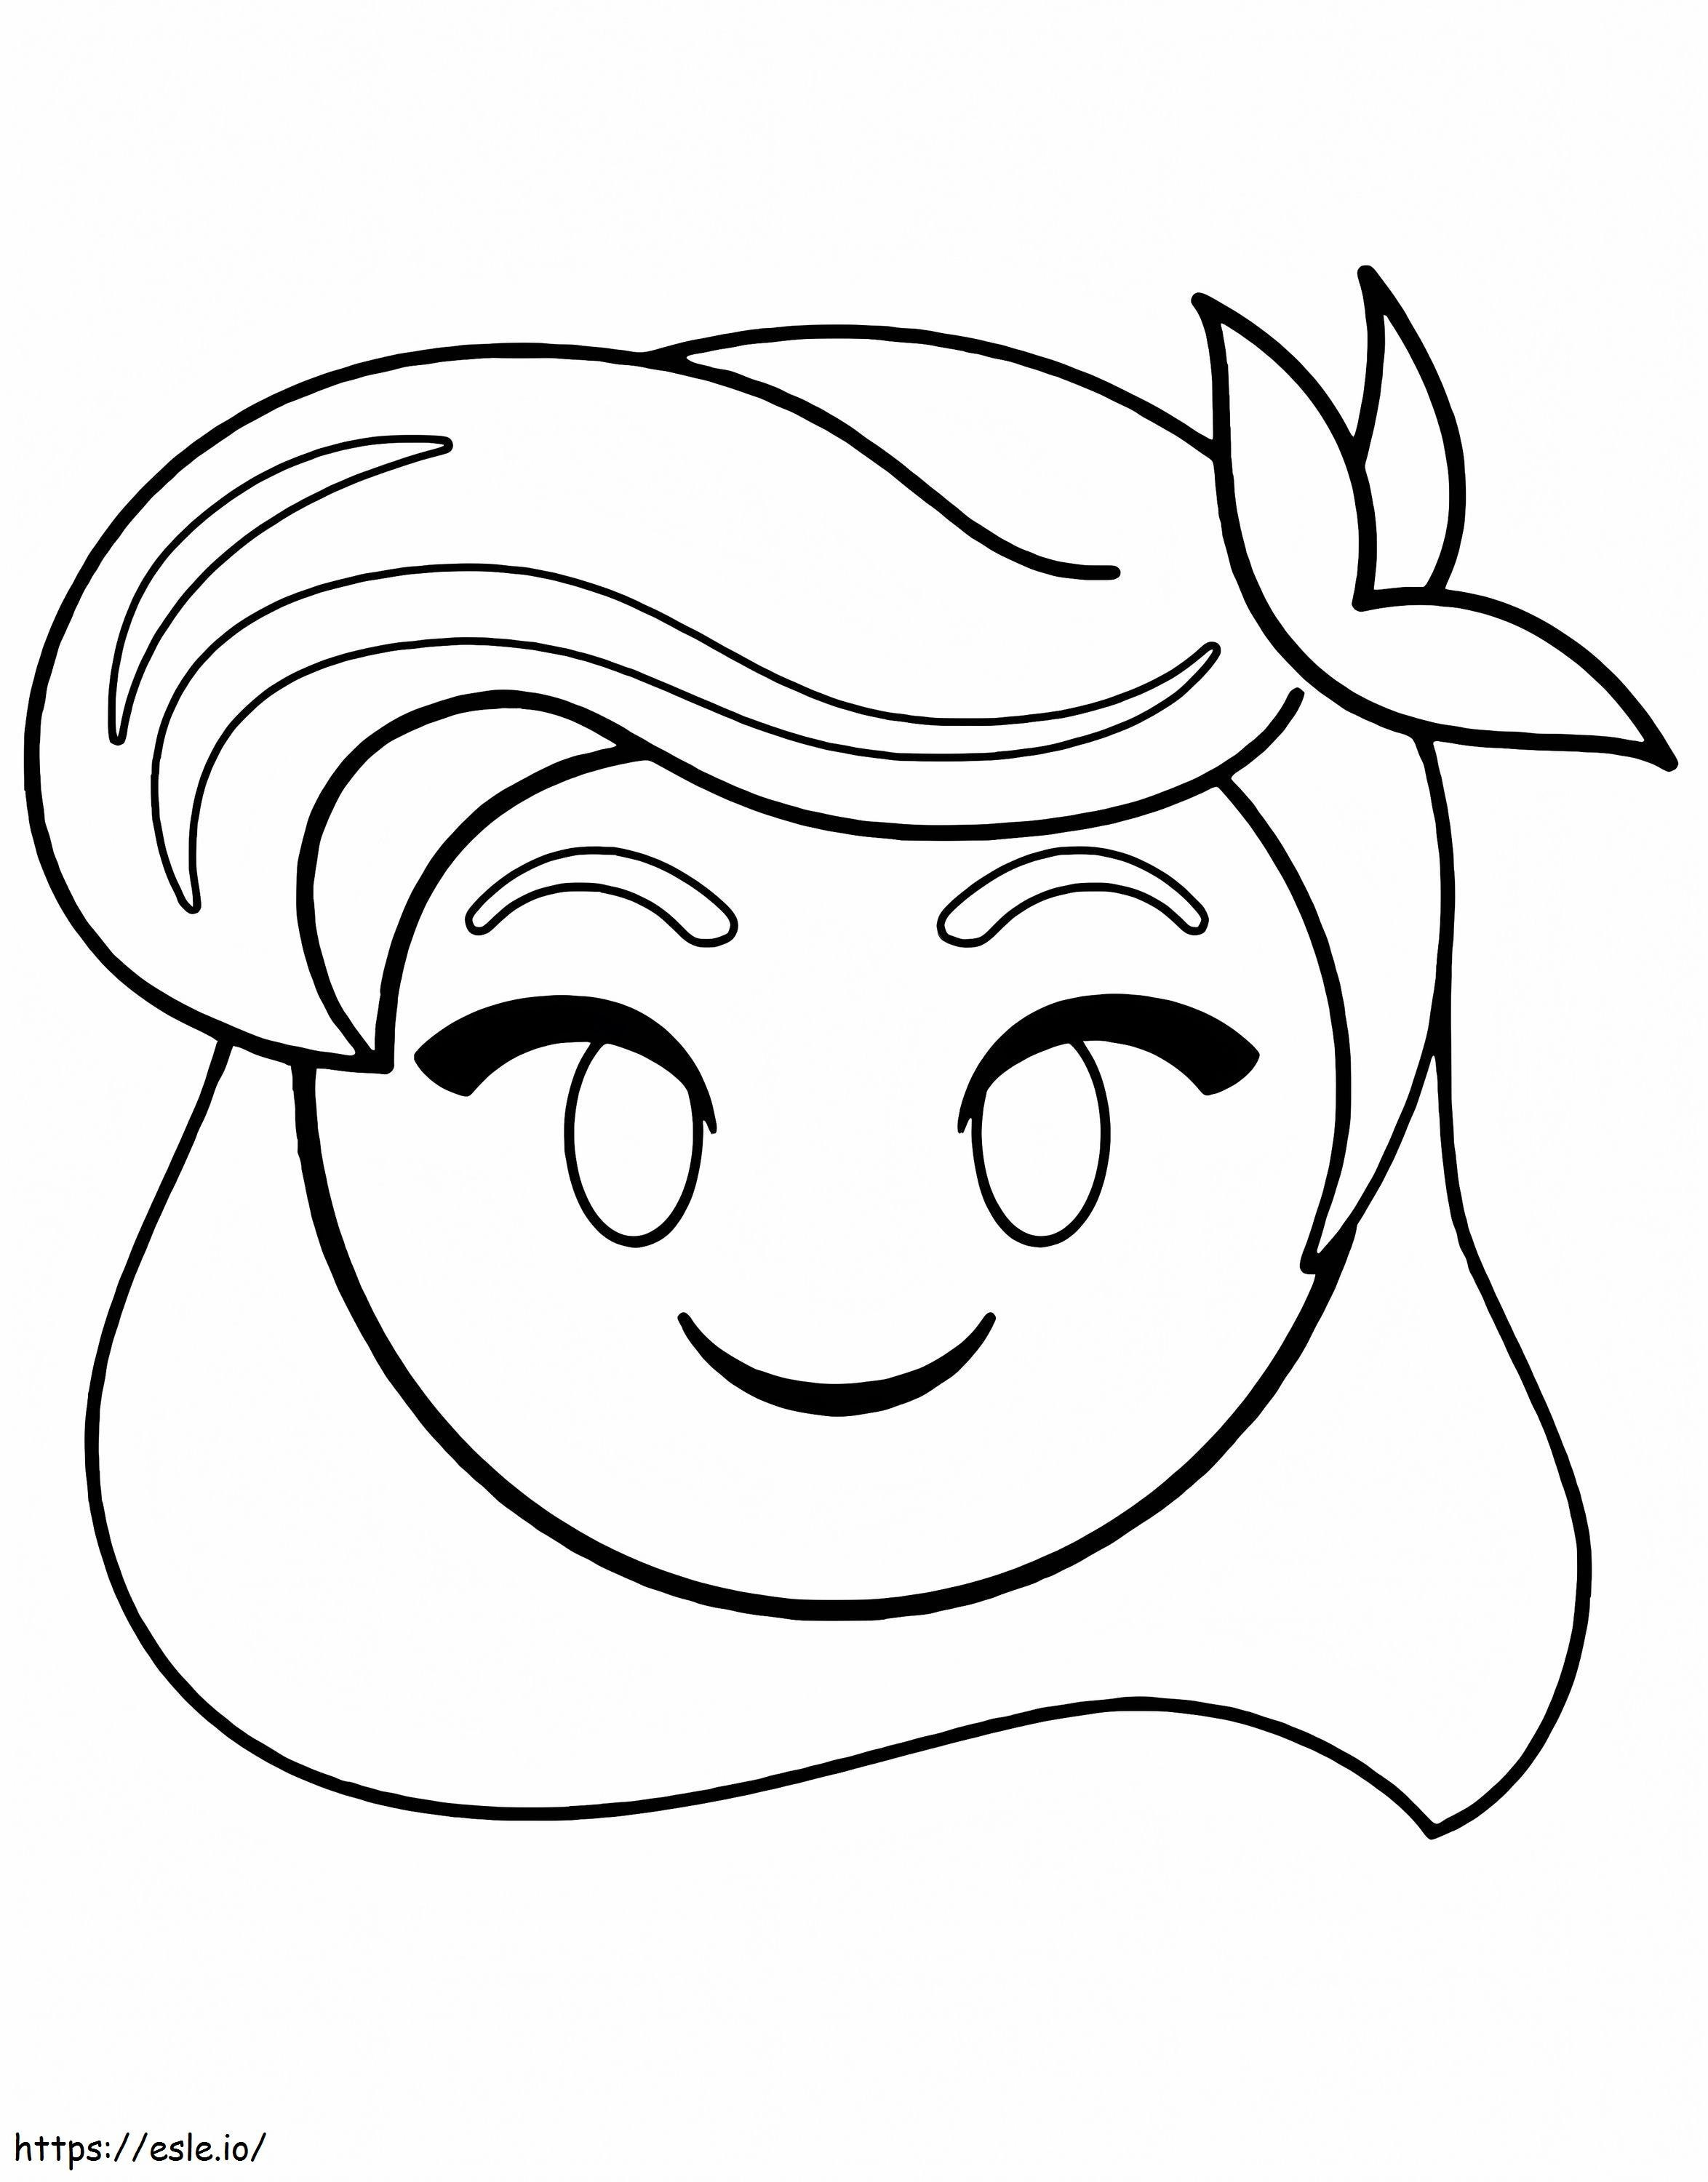 Emoji Cara De Olaf kolorowanka